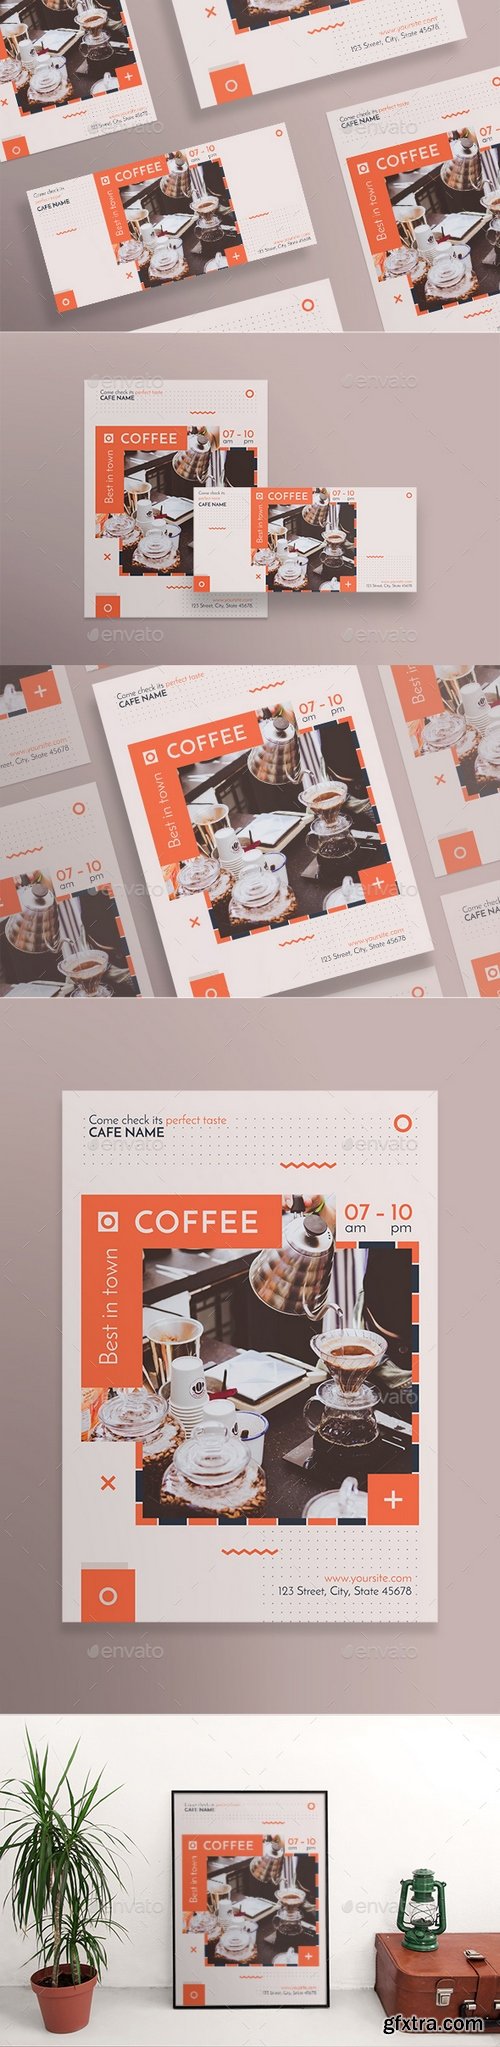 Graphicriver - Coffee Shop Flyers 20899125